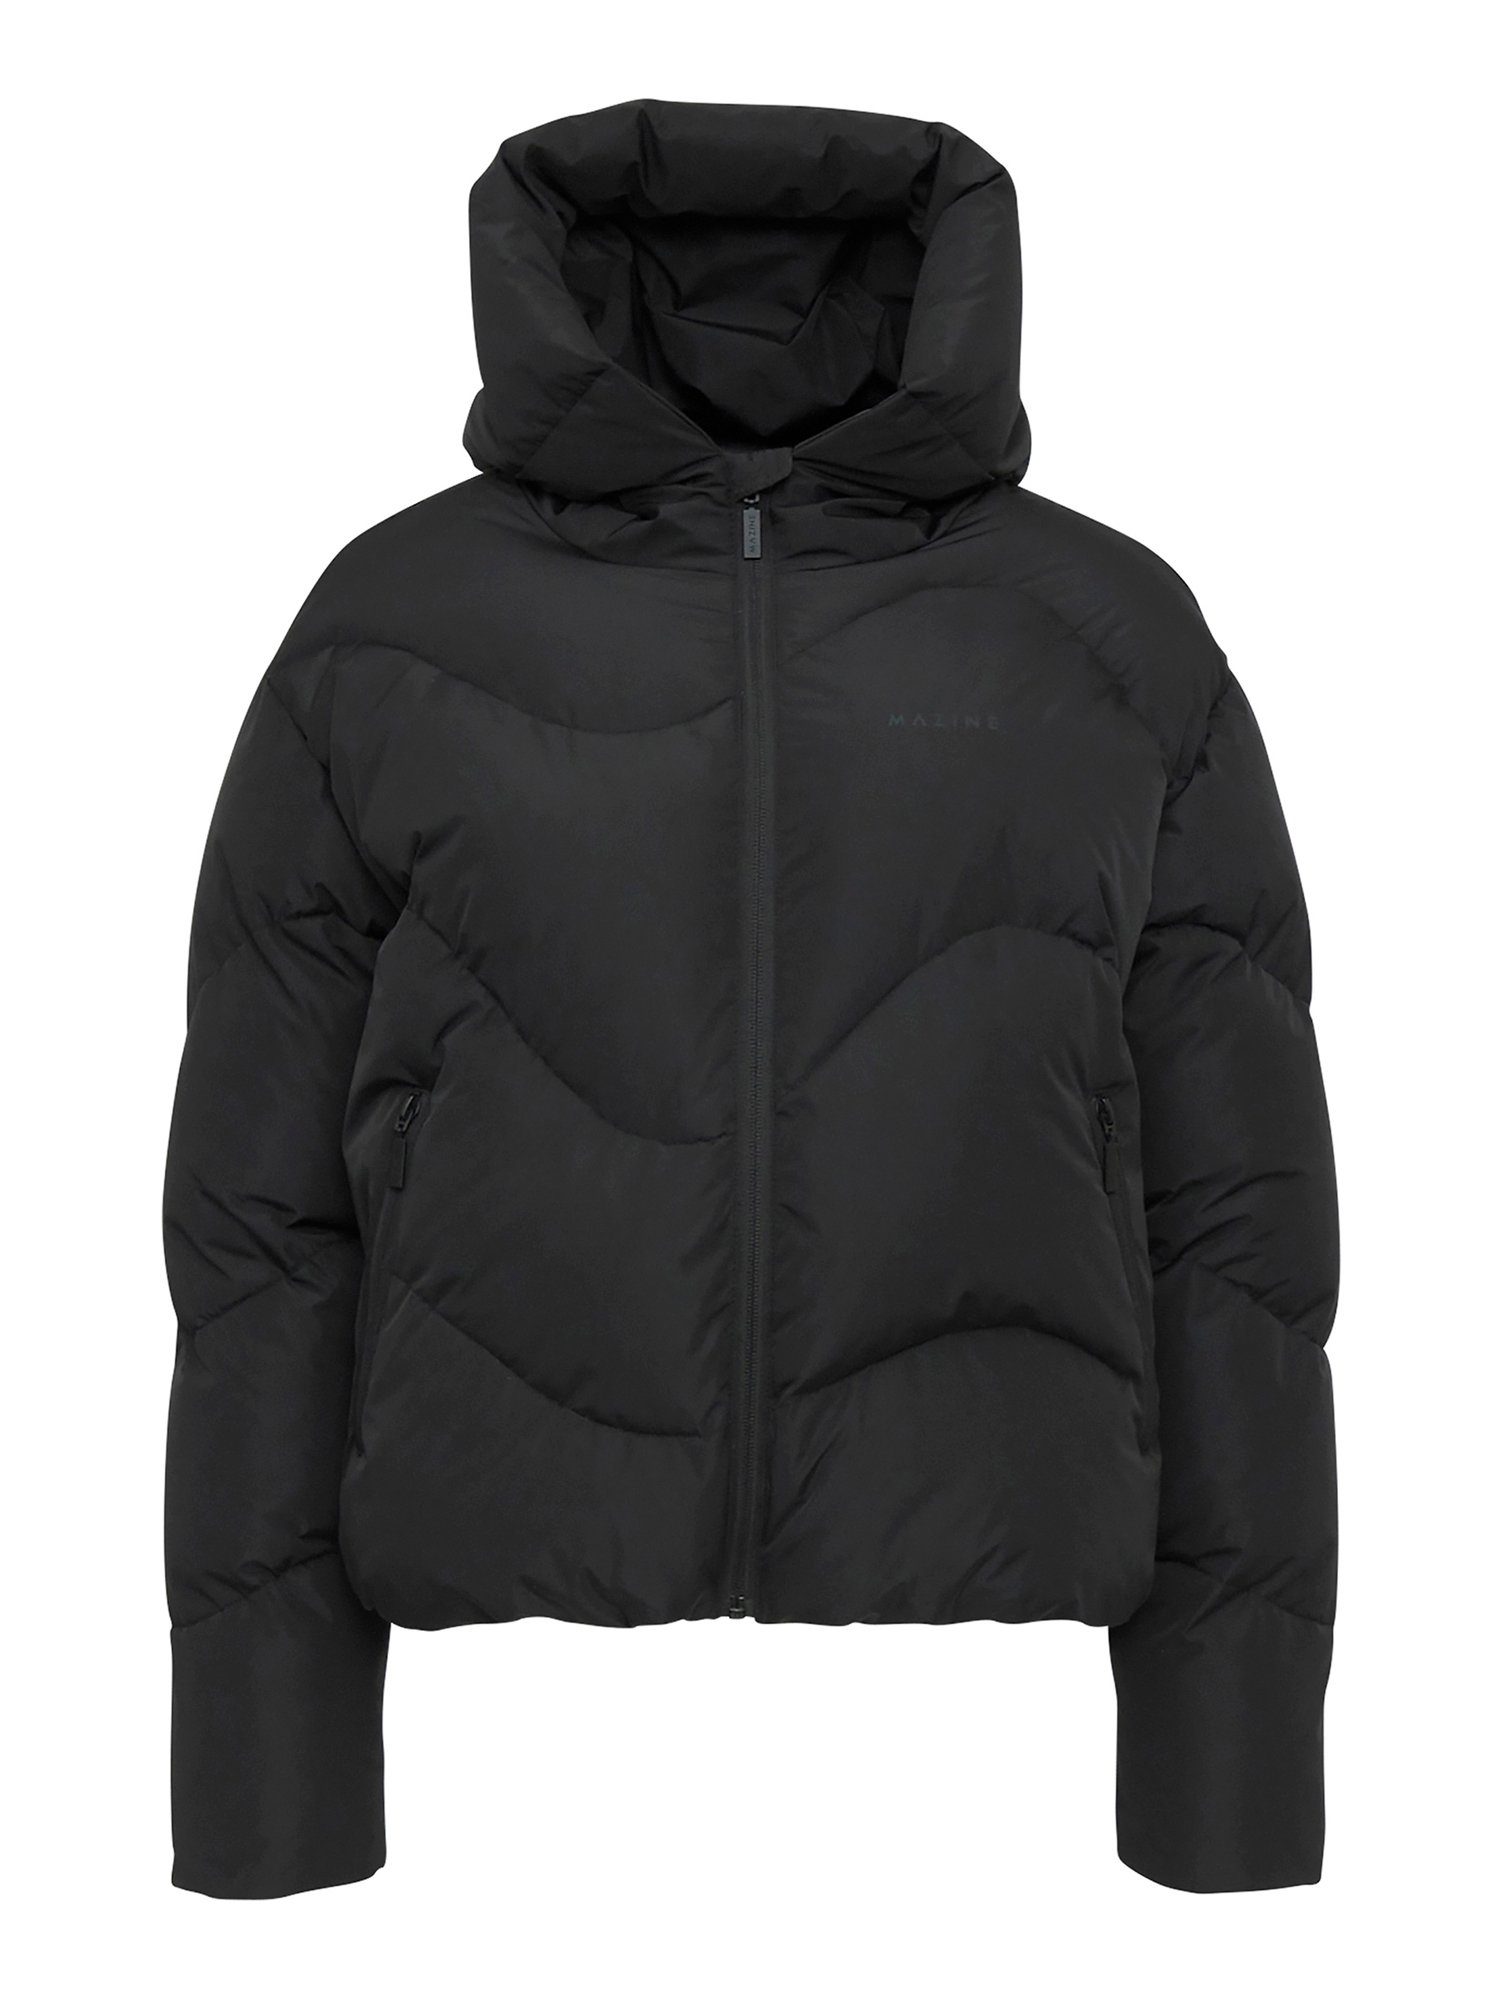 MAZINE Winterjacke Dana Puffer Jacket warm gefüttert black